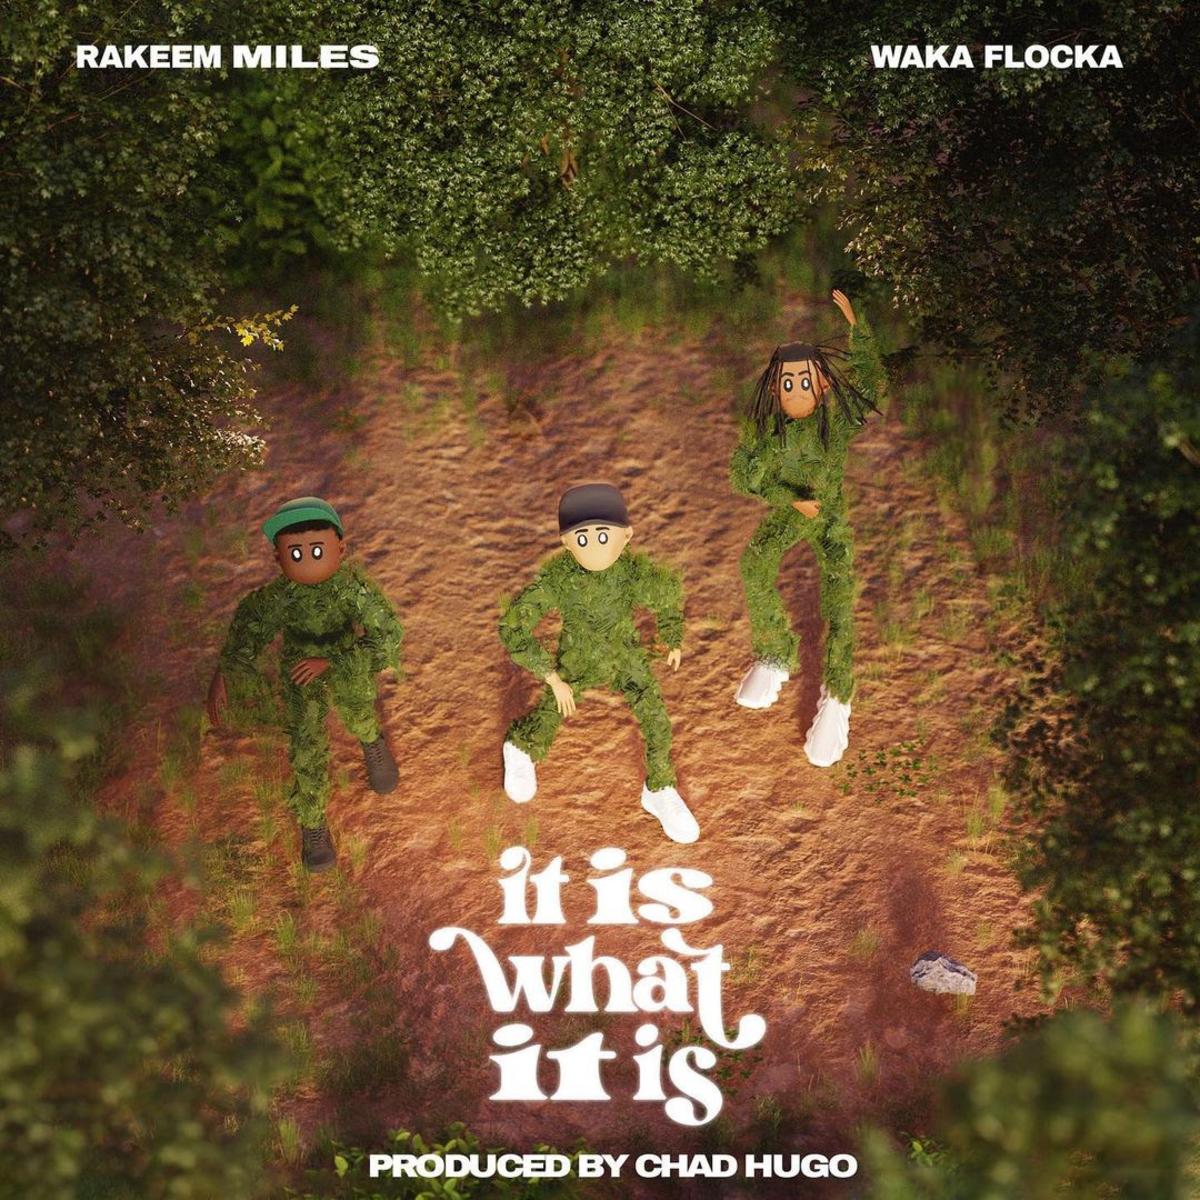 DOWNLOAD MP3: Rakeem Miles - It Is What It Is Ft. Waka Flocka & Chad Hugo